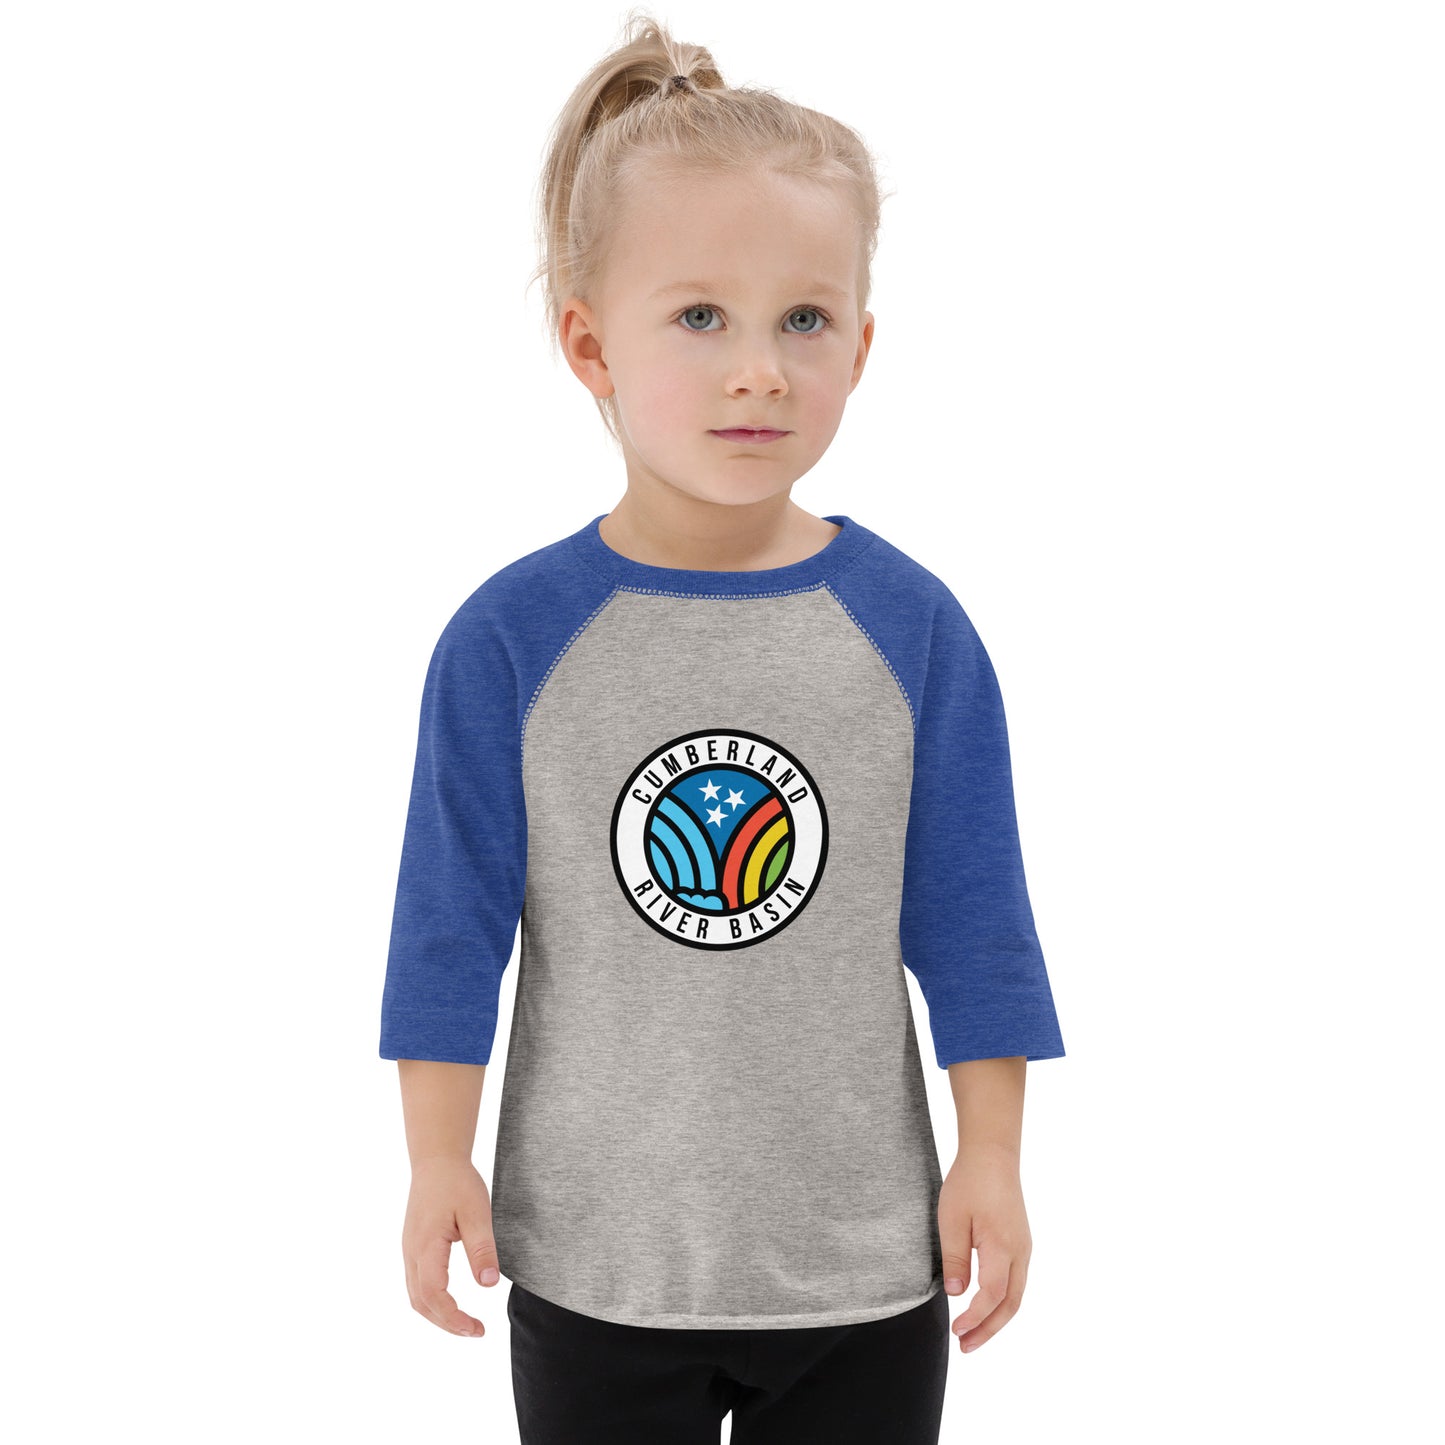 Basin Toddler Baseball Shirt